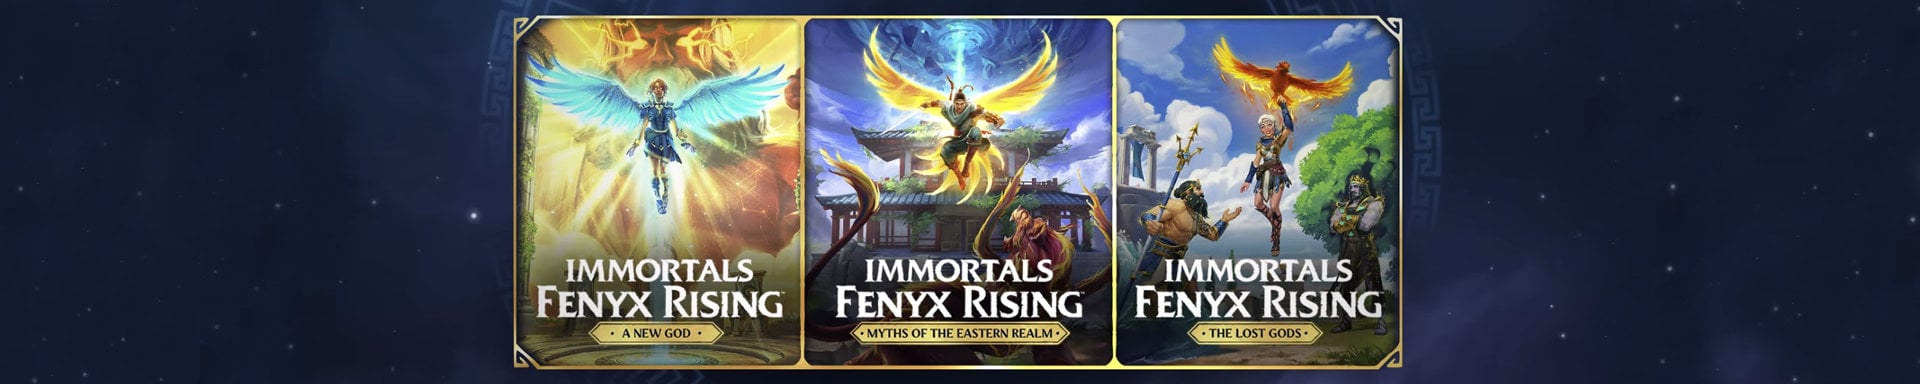 Immortals Fenyx Rising Season Pass slice